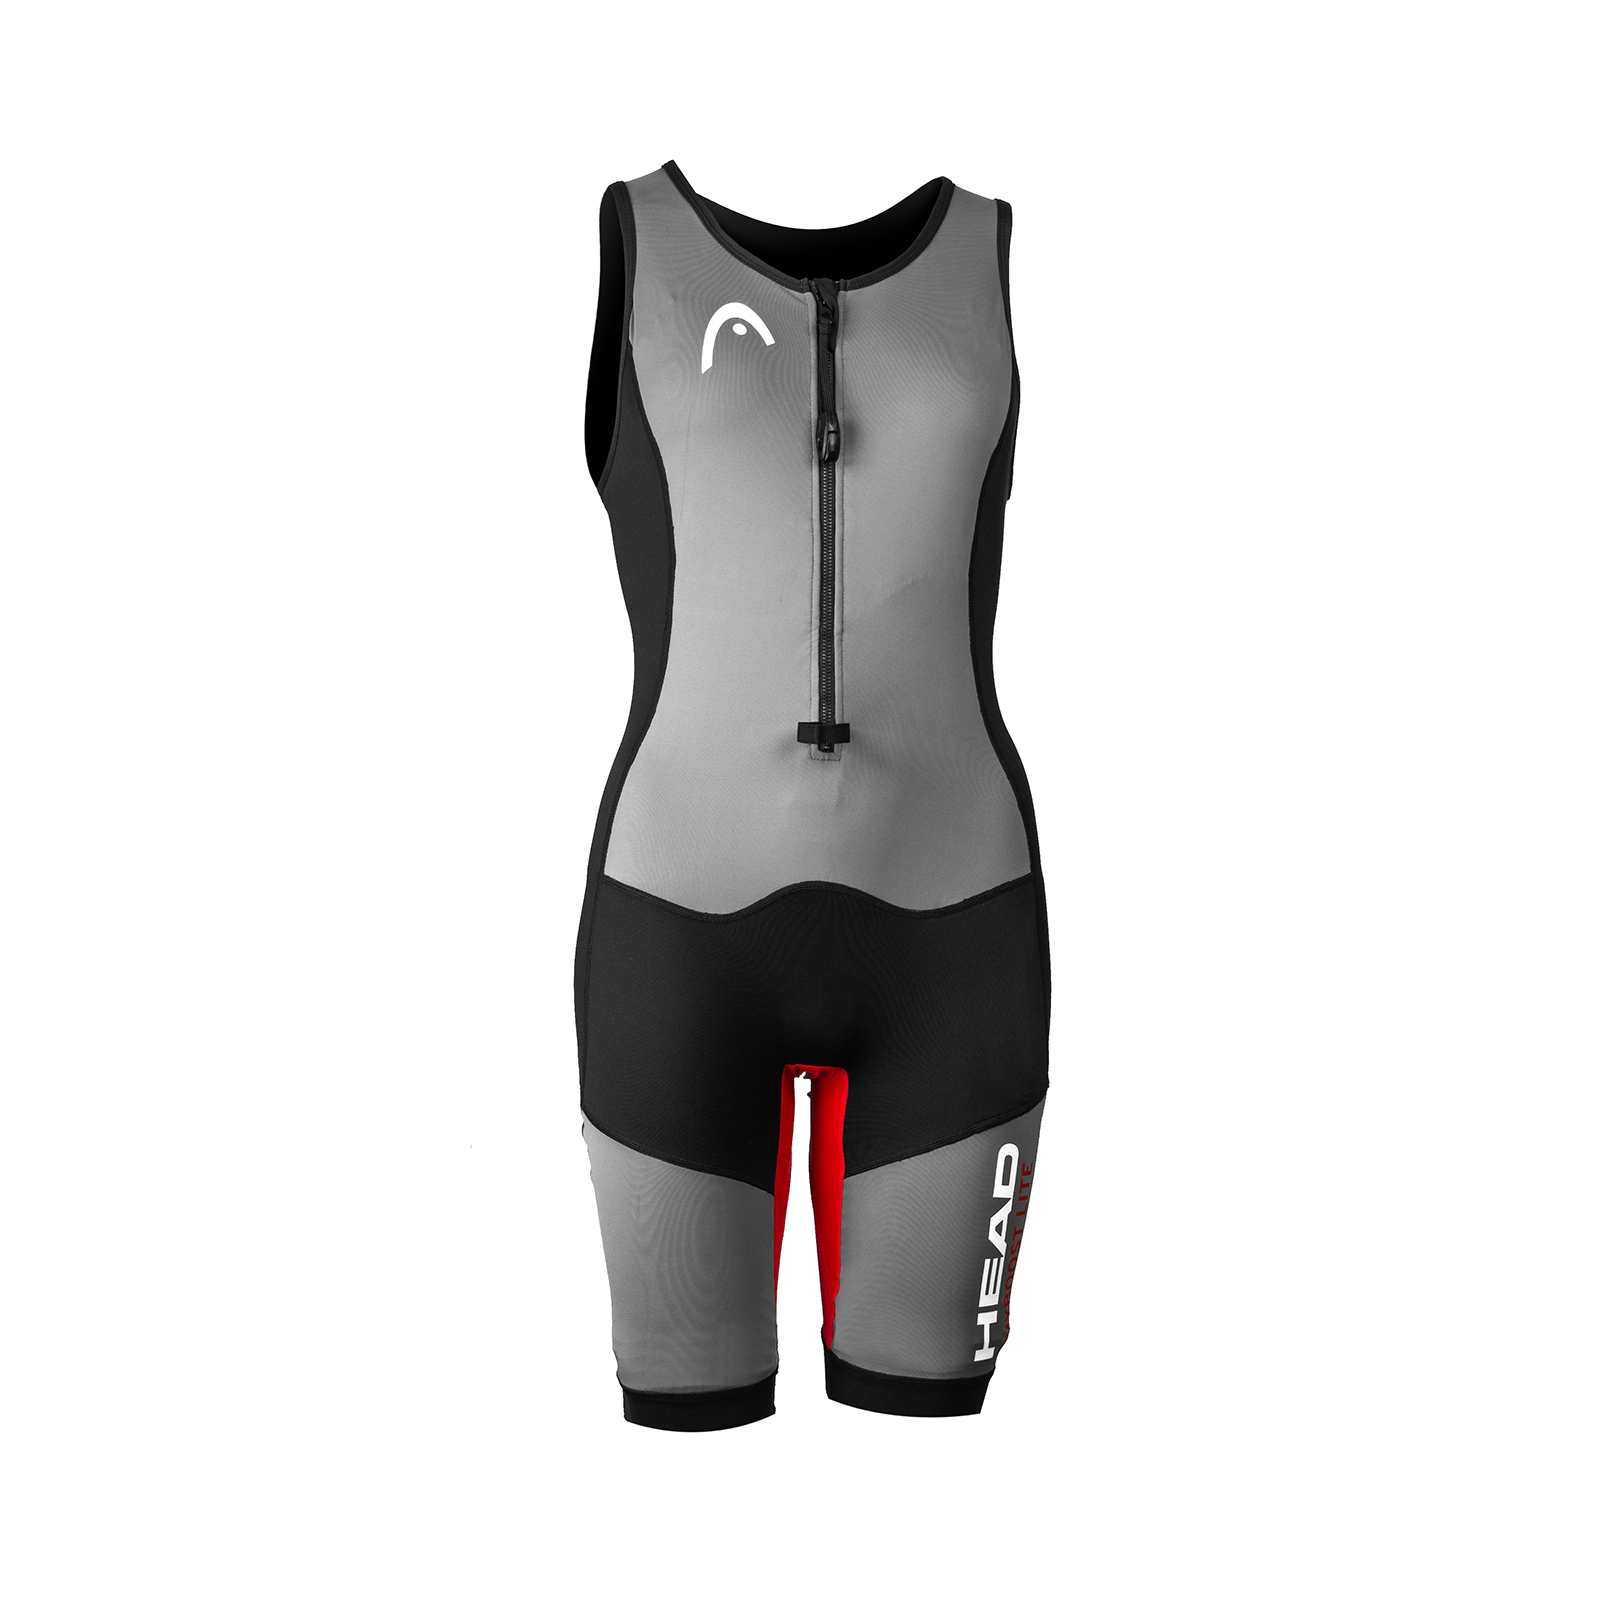 Head myBoost LITE Sleeveless SwimRun Wetsuit Women Black/Silver/Red • Safety in water sports